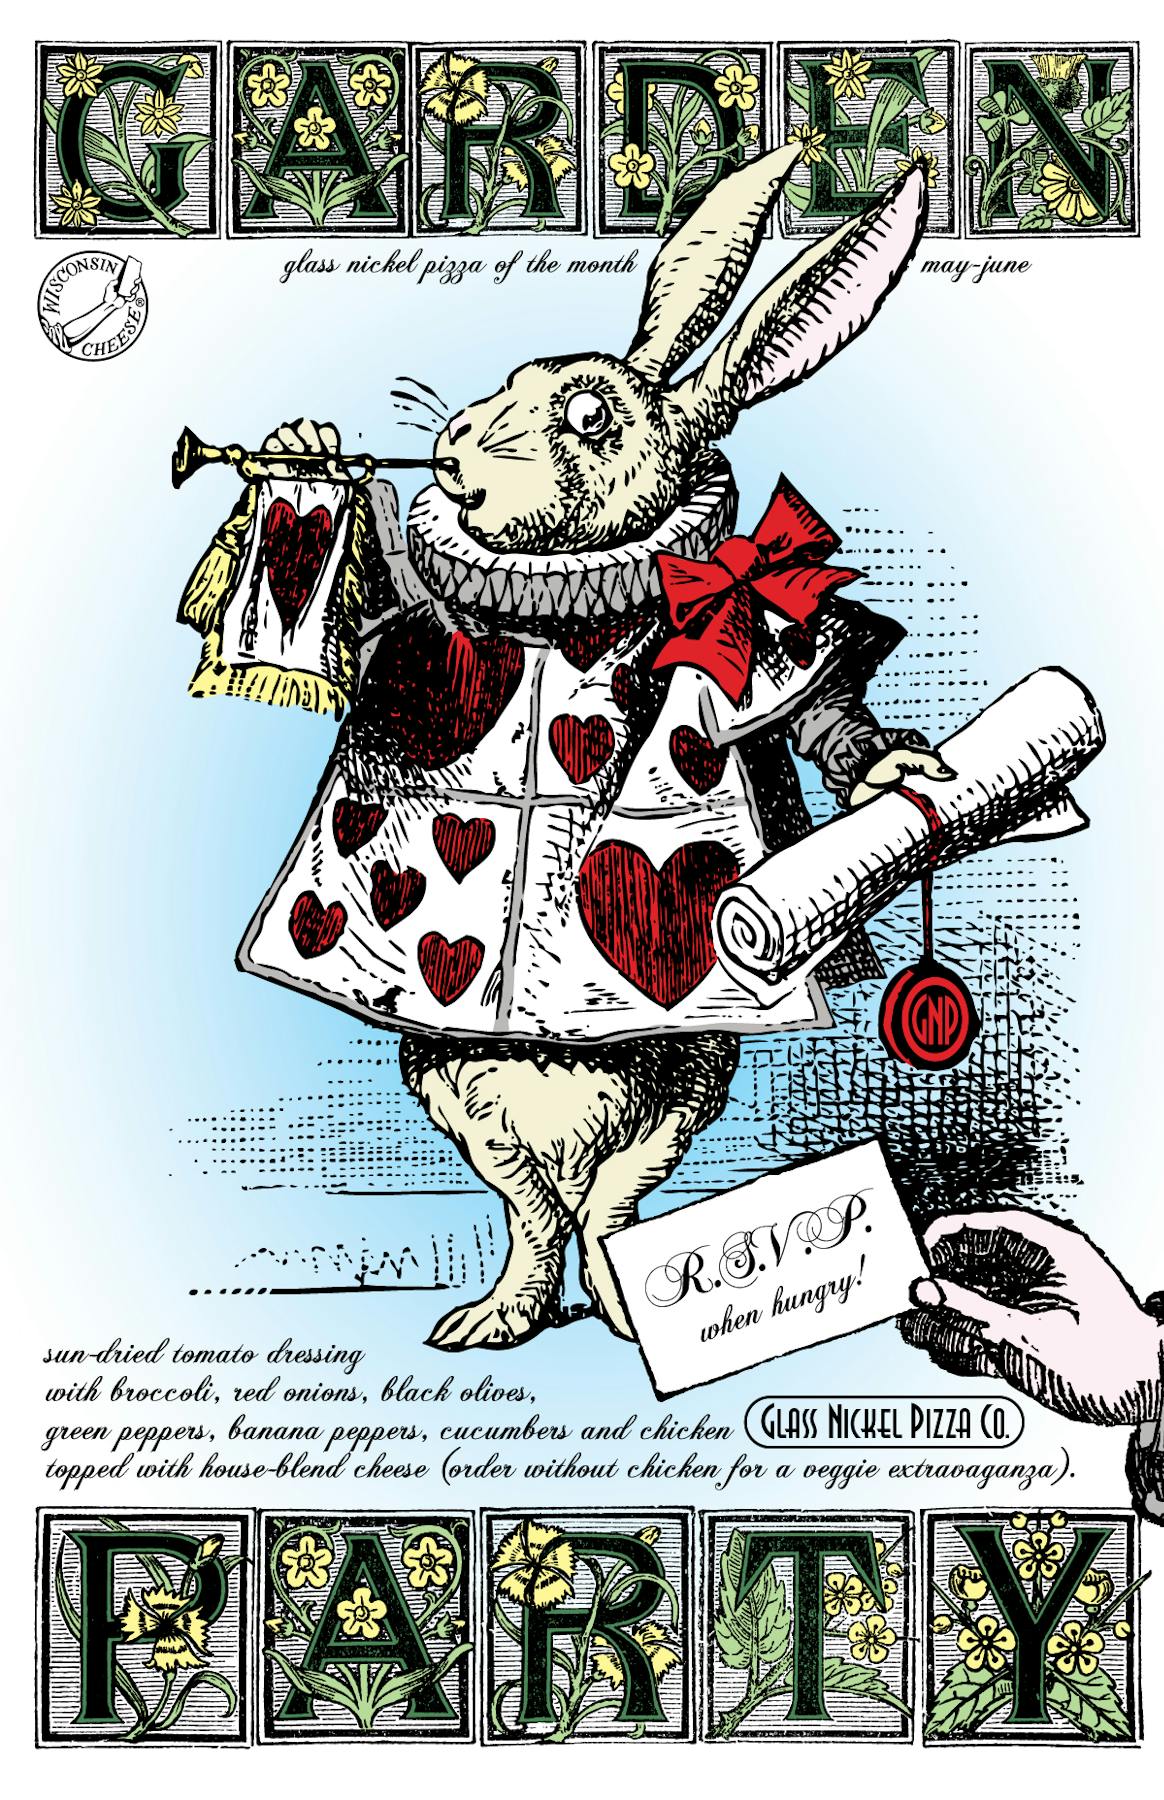 Mad Rabbit Illustration 2016